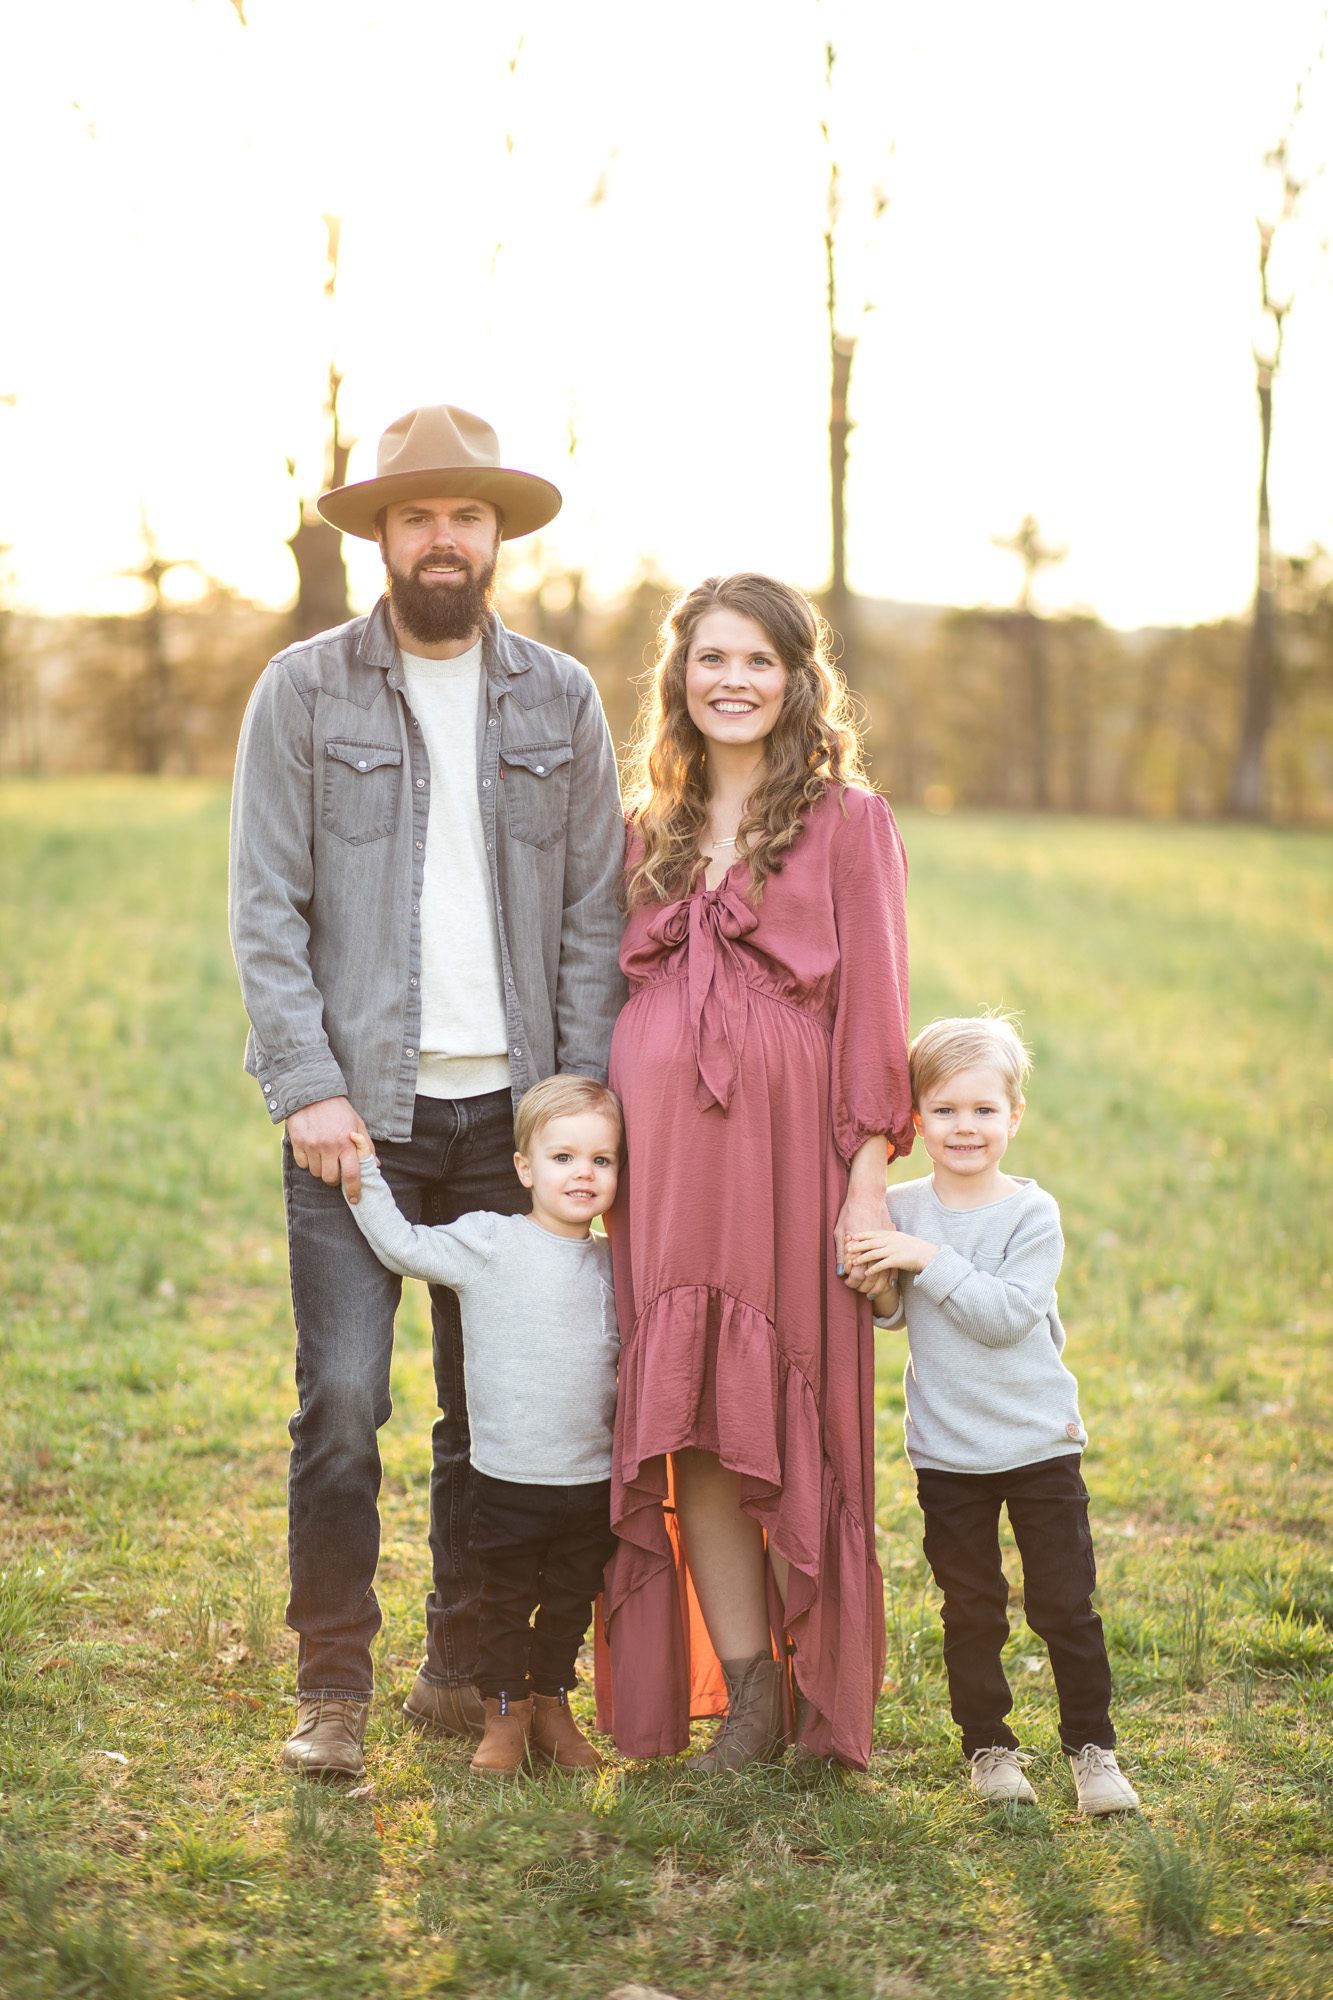 hipster family portrait maternity photo sunset wardrobe ideas 